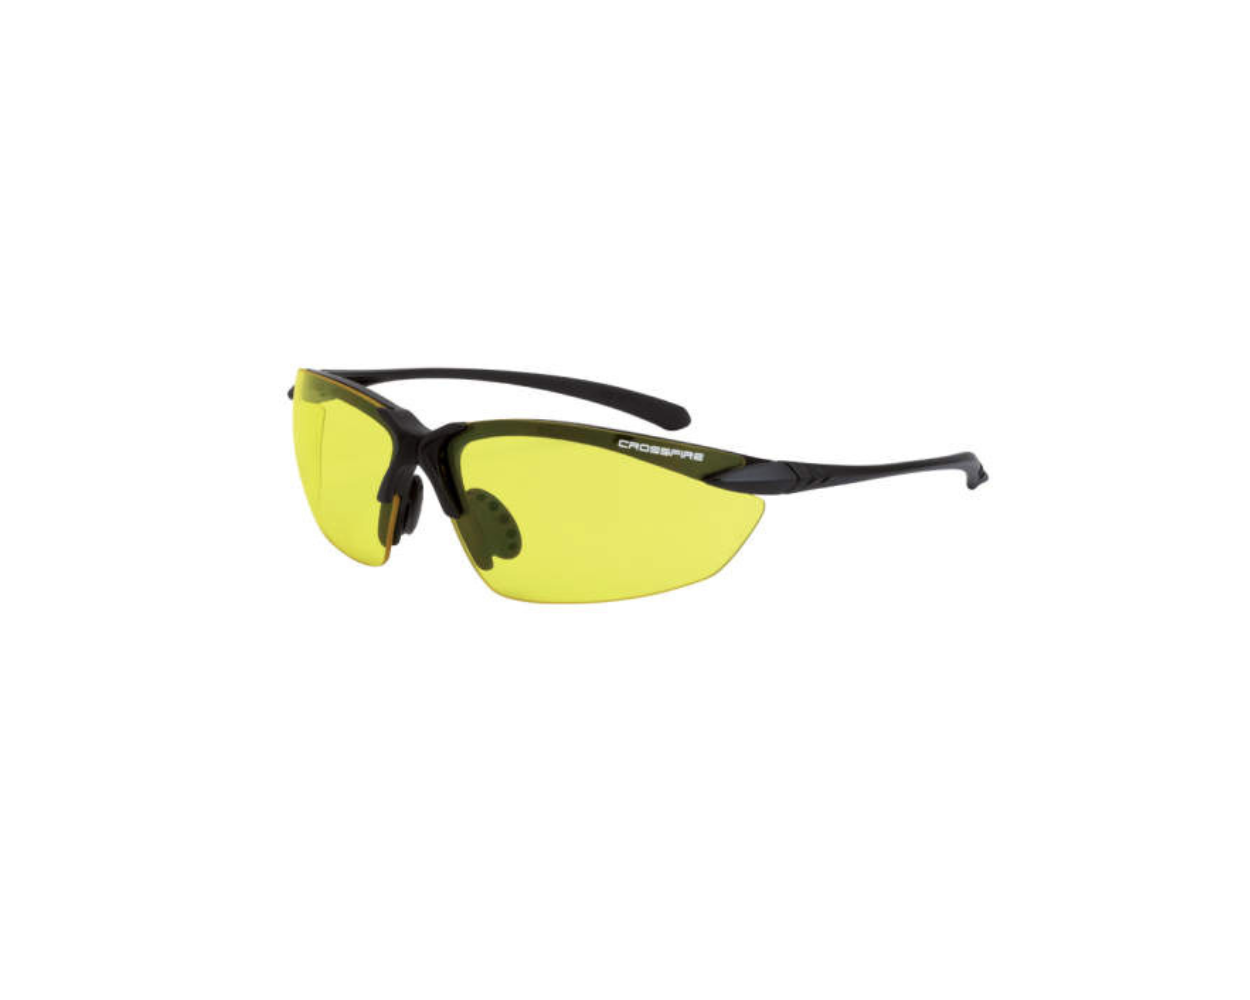 Crossfire 925 Sniper Safety Glasses - Black Frame - Yellow Lens